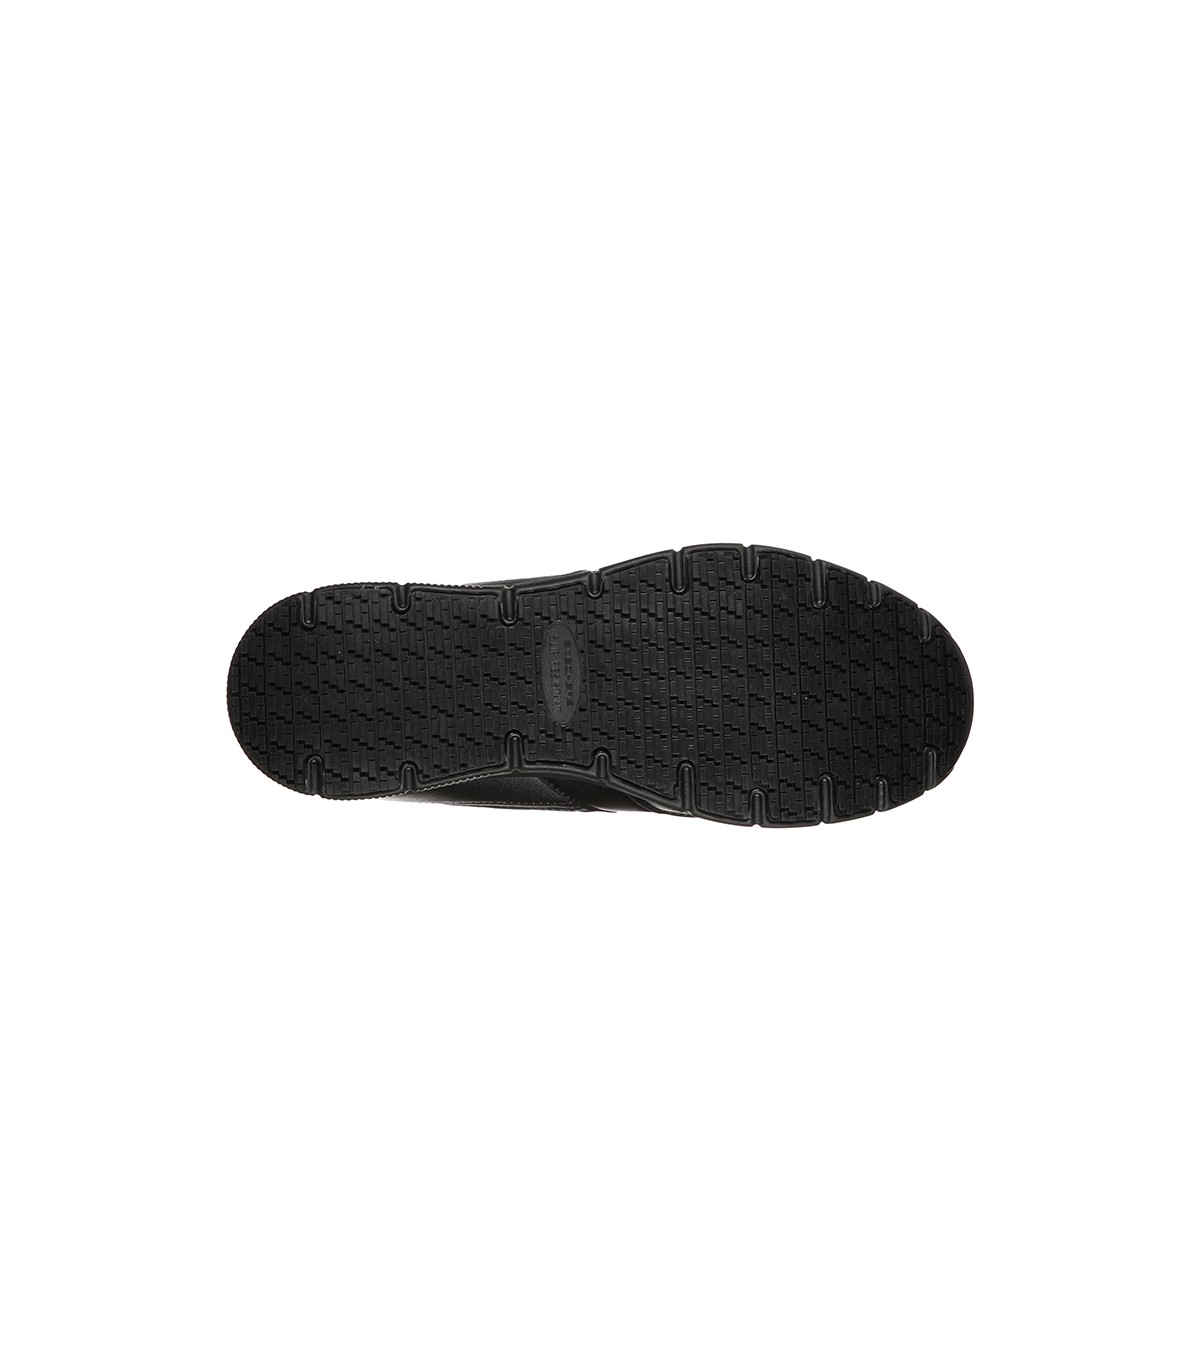 Zapatos de trabajo negros para hombre Skechers Nampa en MEGACALZADO